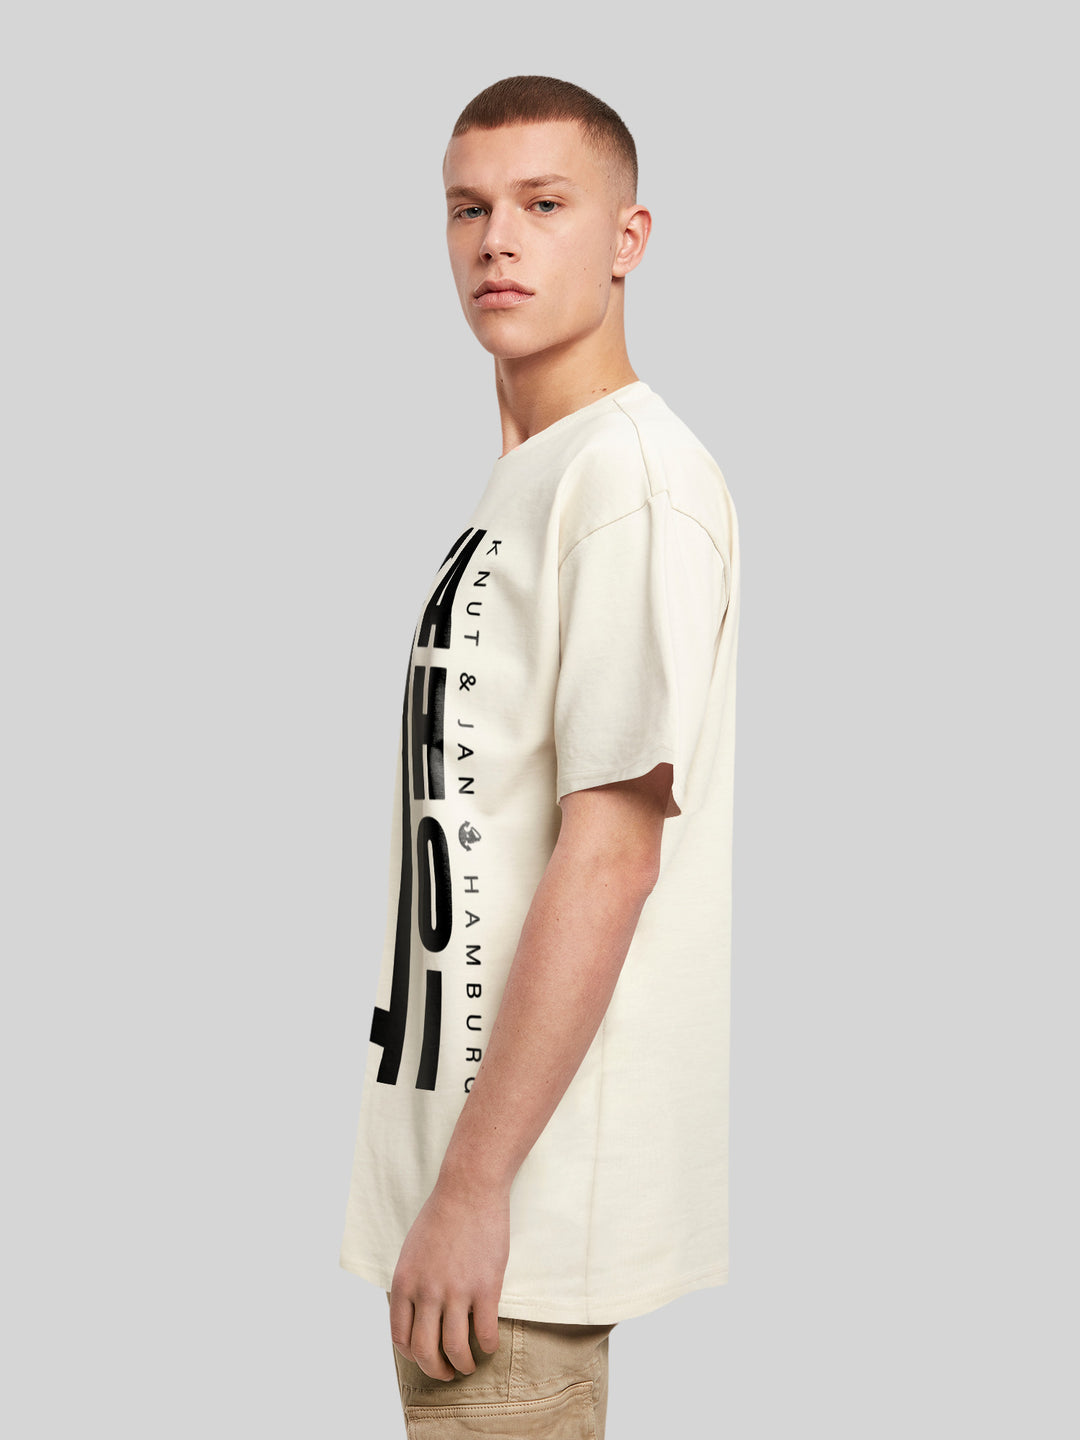 KNUT | Oversize T-Shirt Herren Ahoi Anker Crop